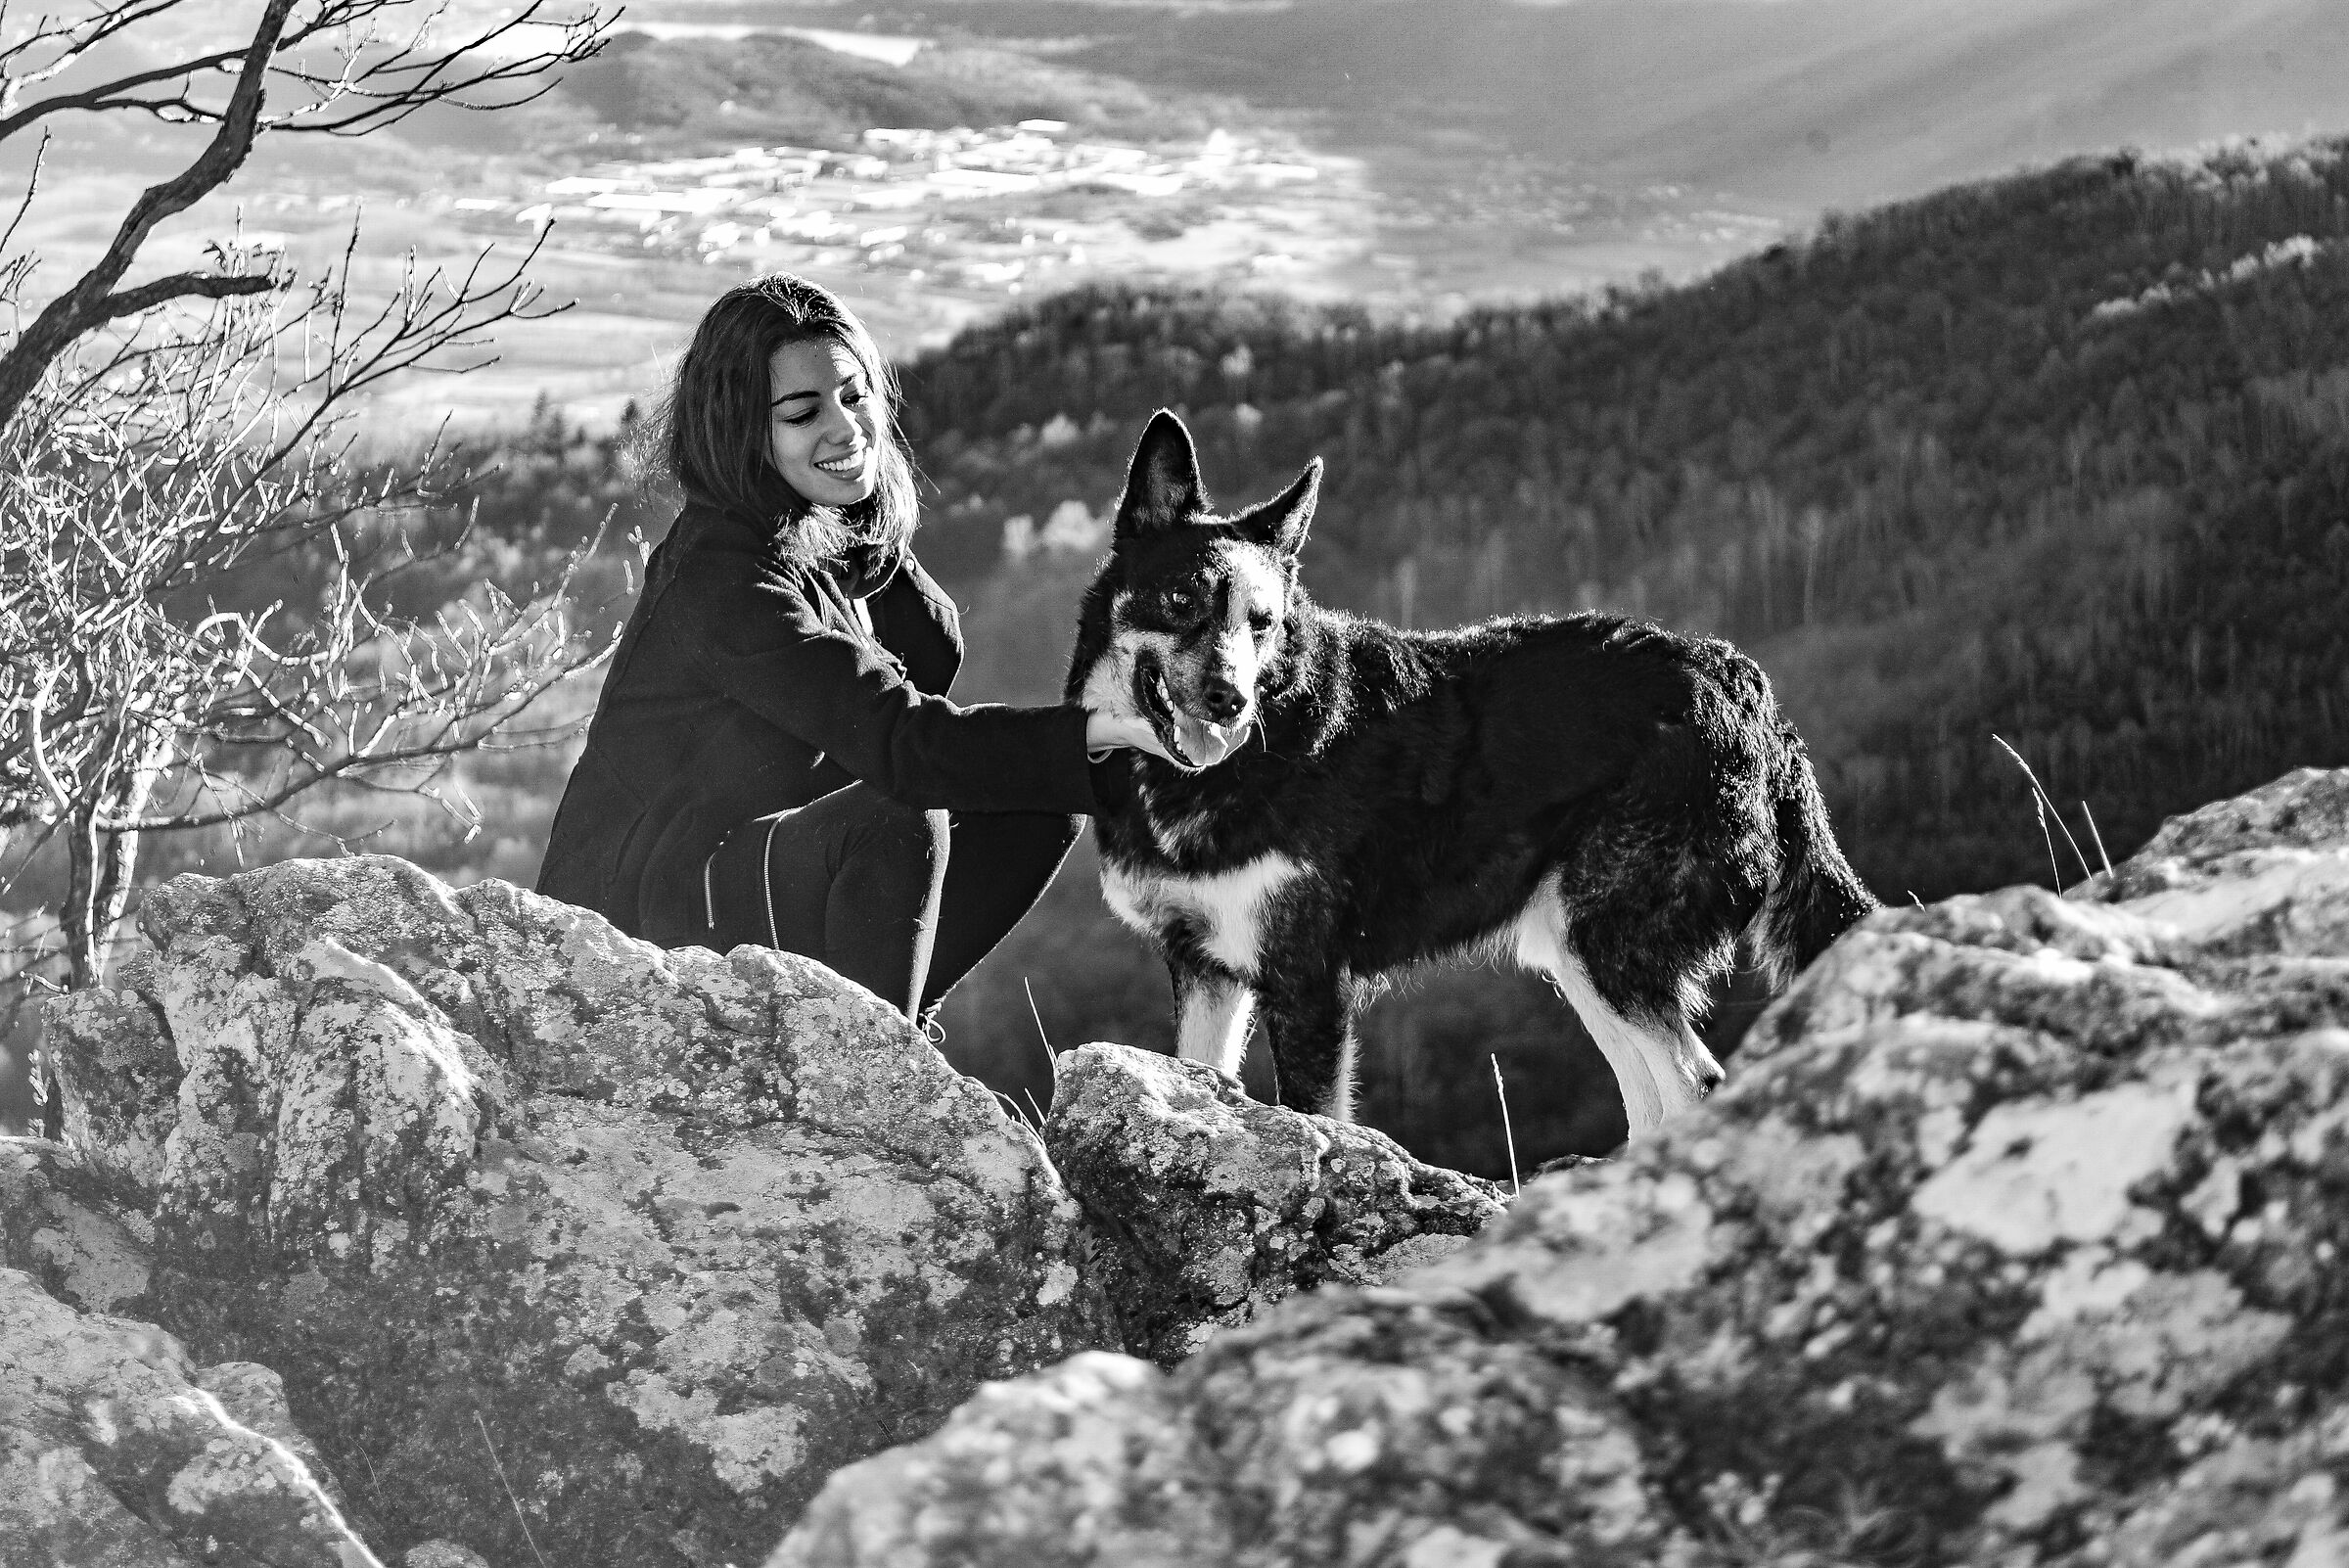 Mirella and the dog Alpi...